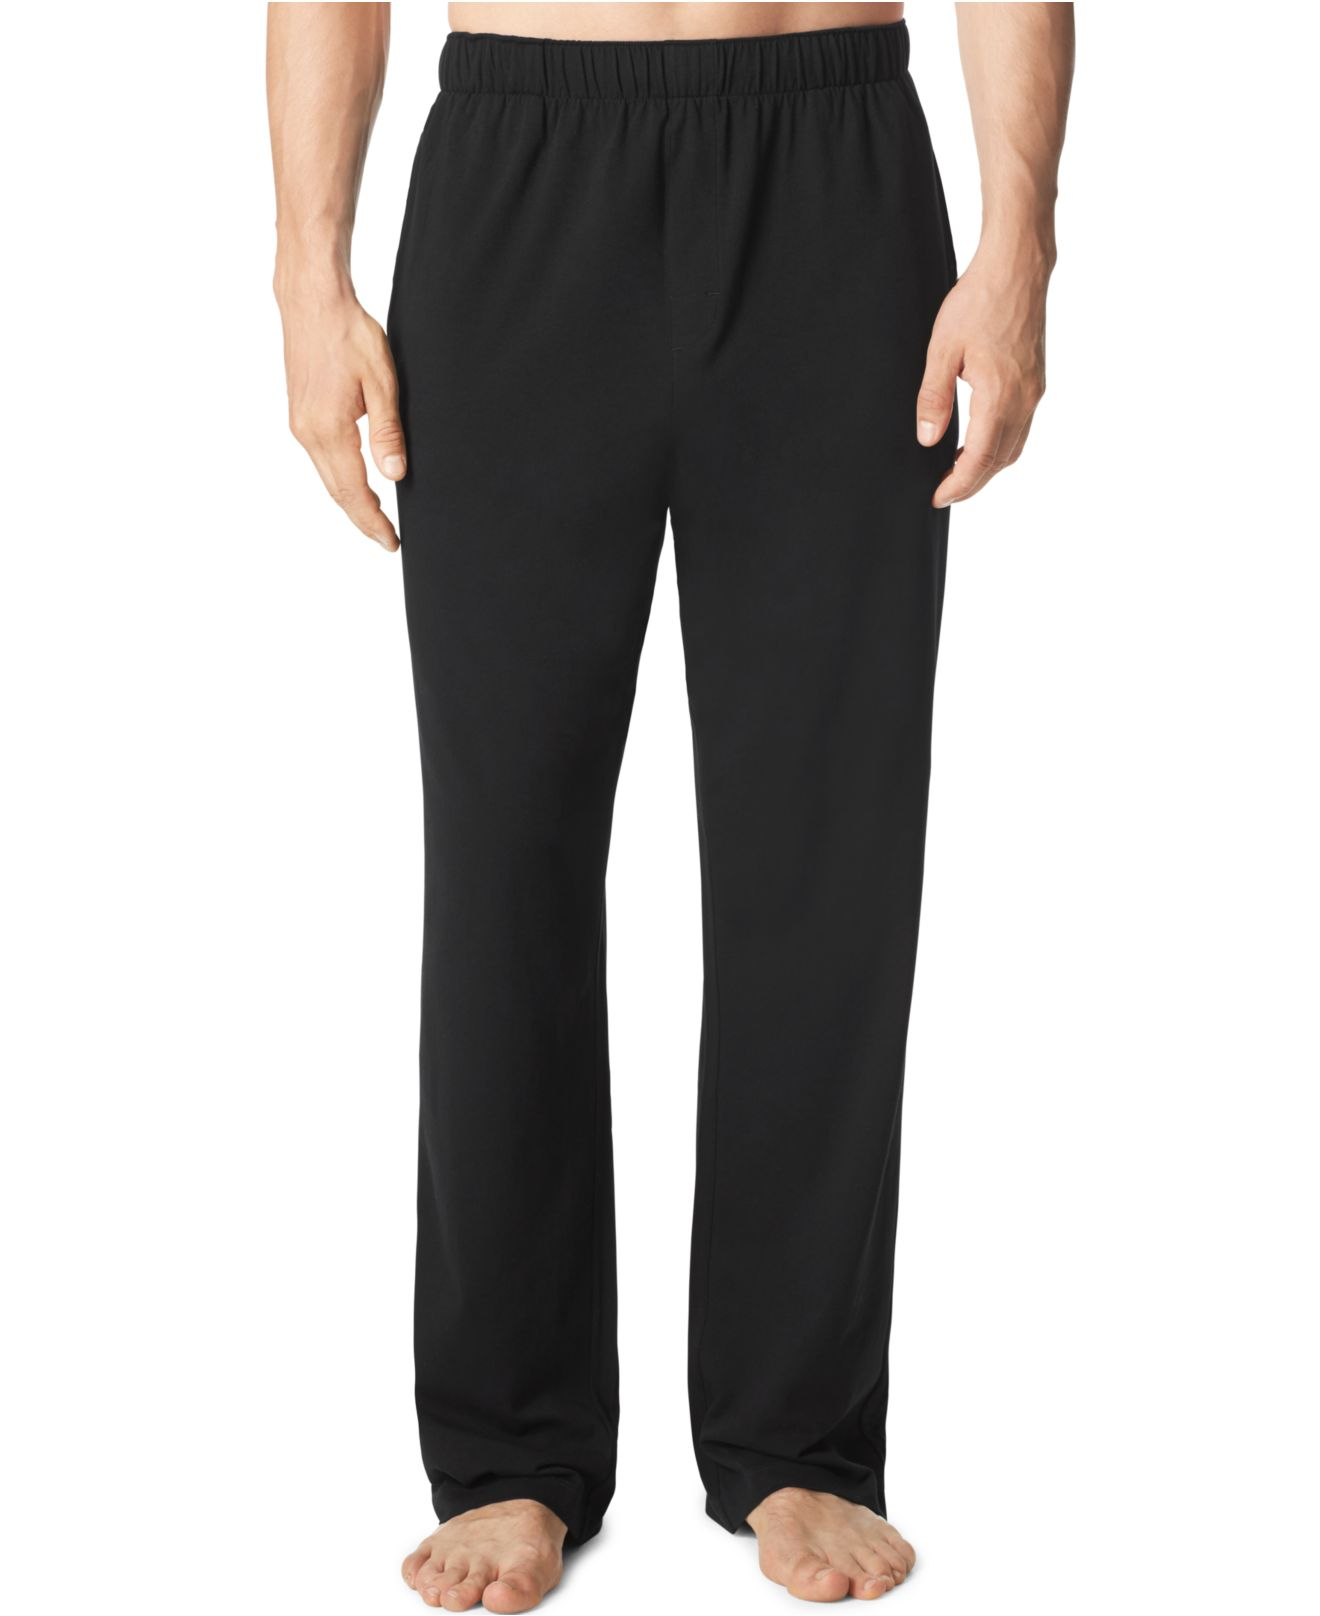 Lyst - Calvin Klein Men's Cotton Jersey Lounge Pants in Black for Men